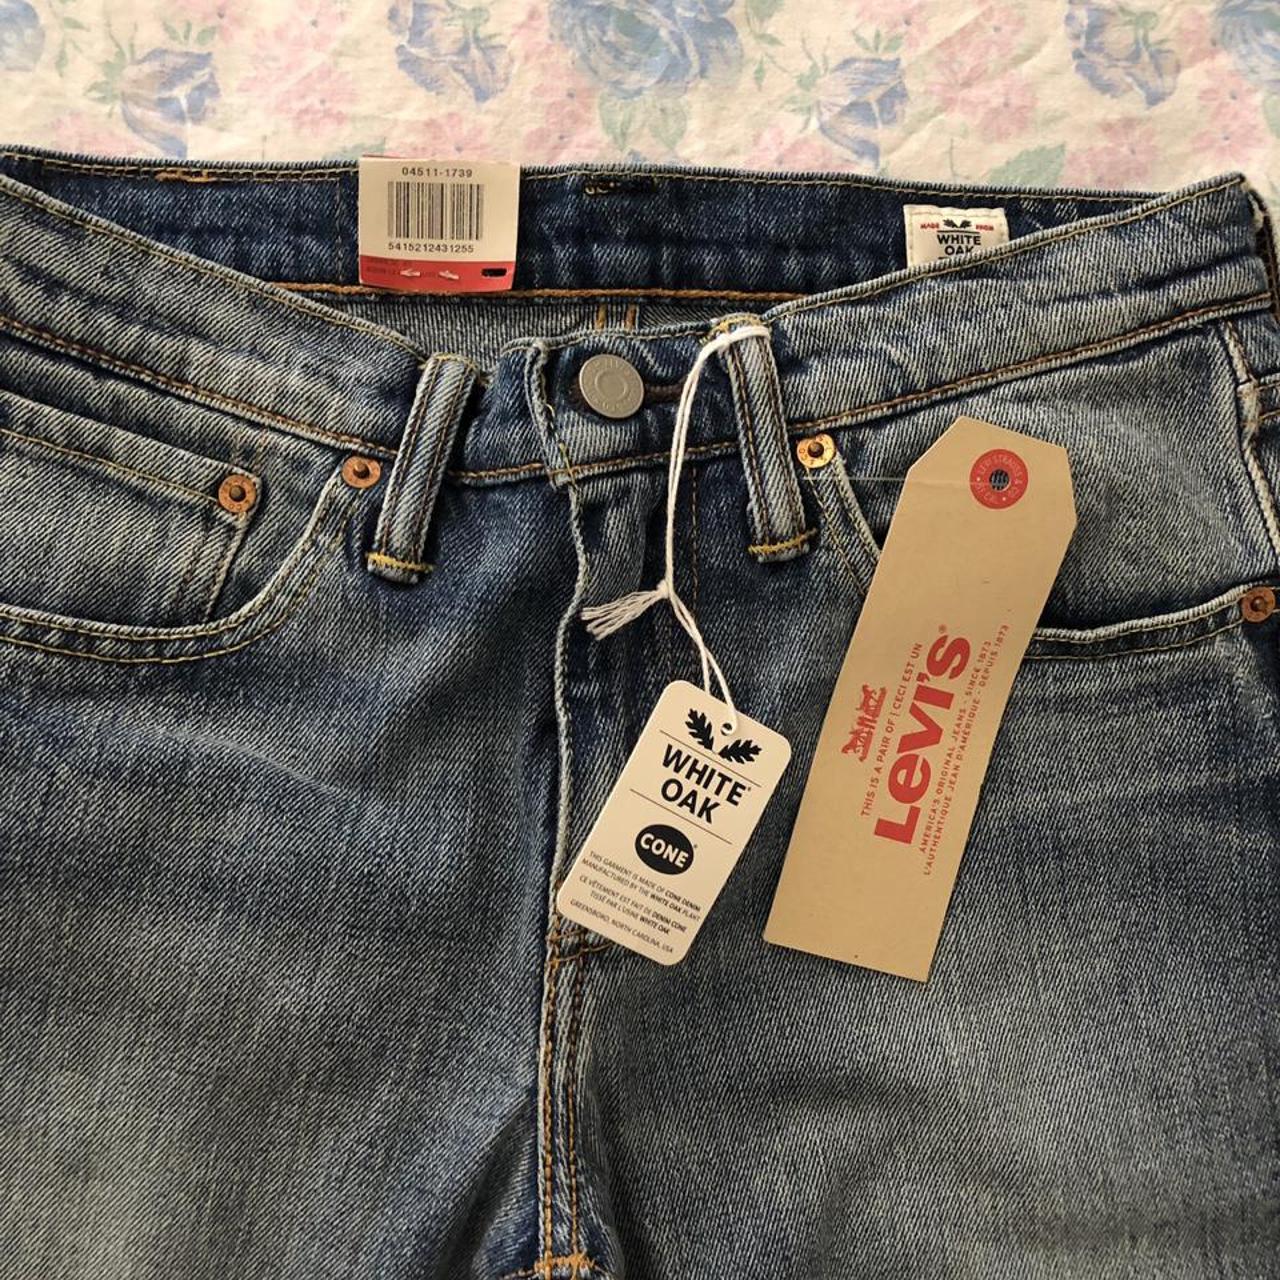 Levi’s jeans white oak 511 W27 L32 New with tag!... - Depop